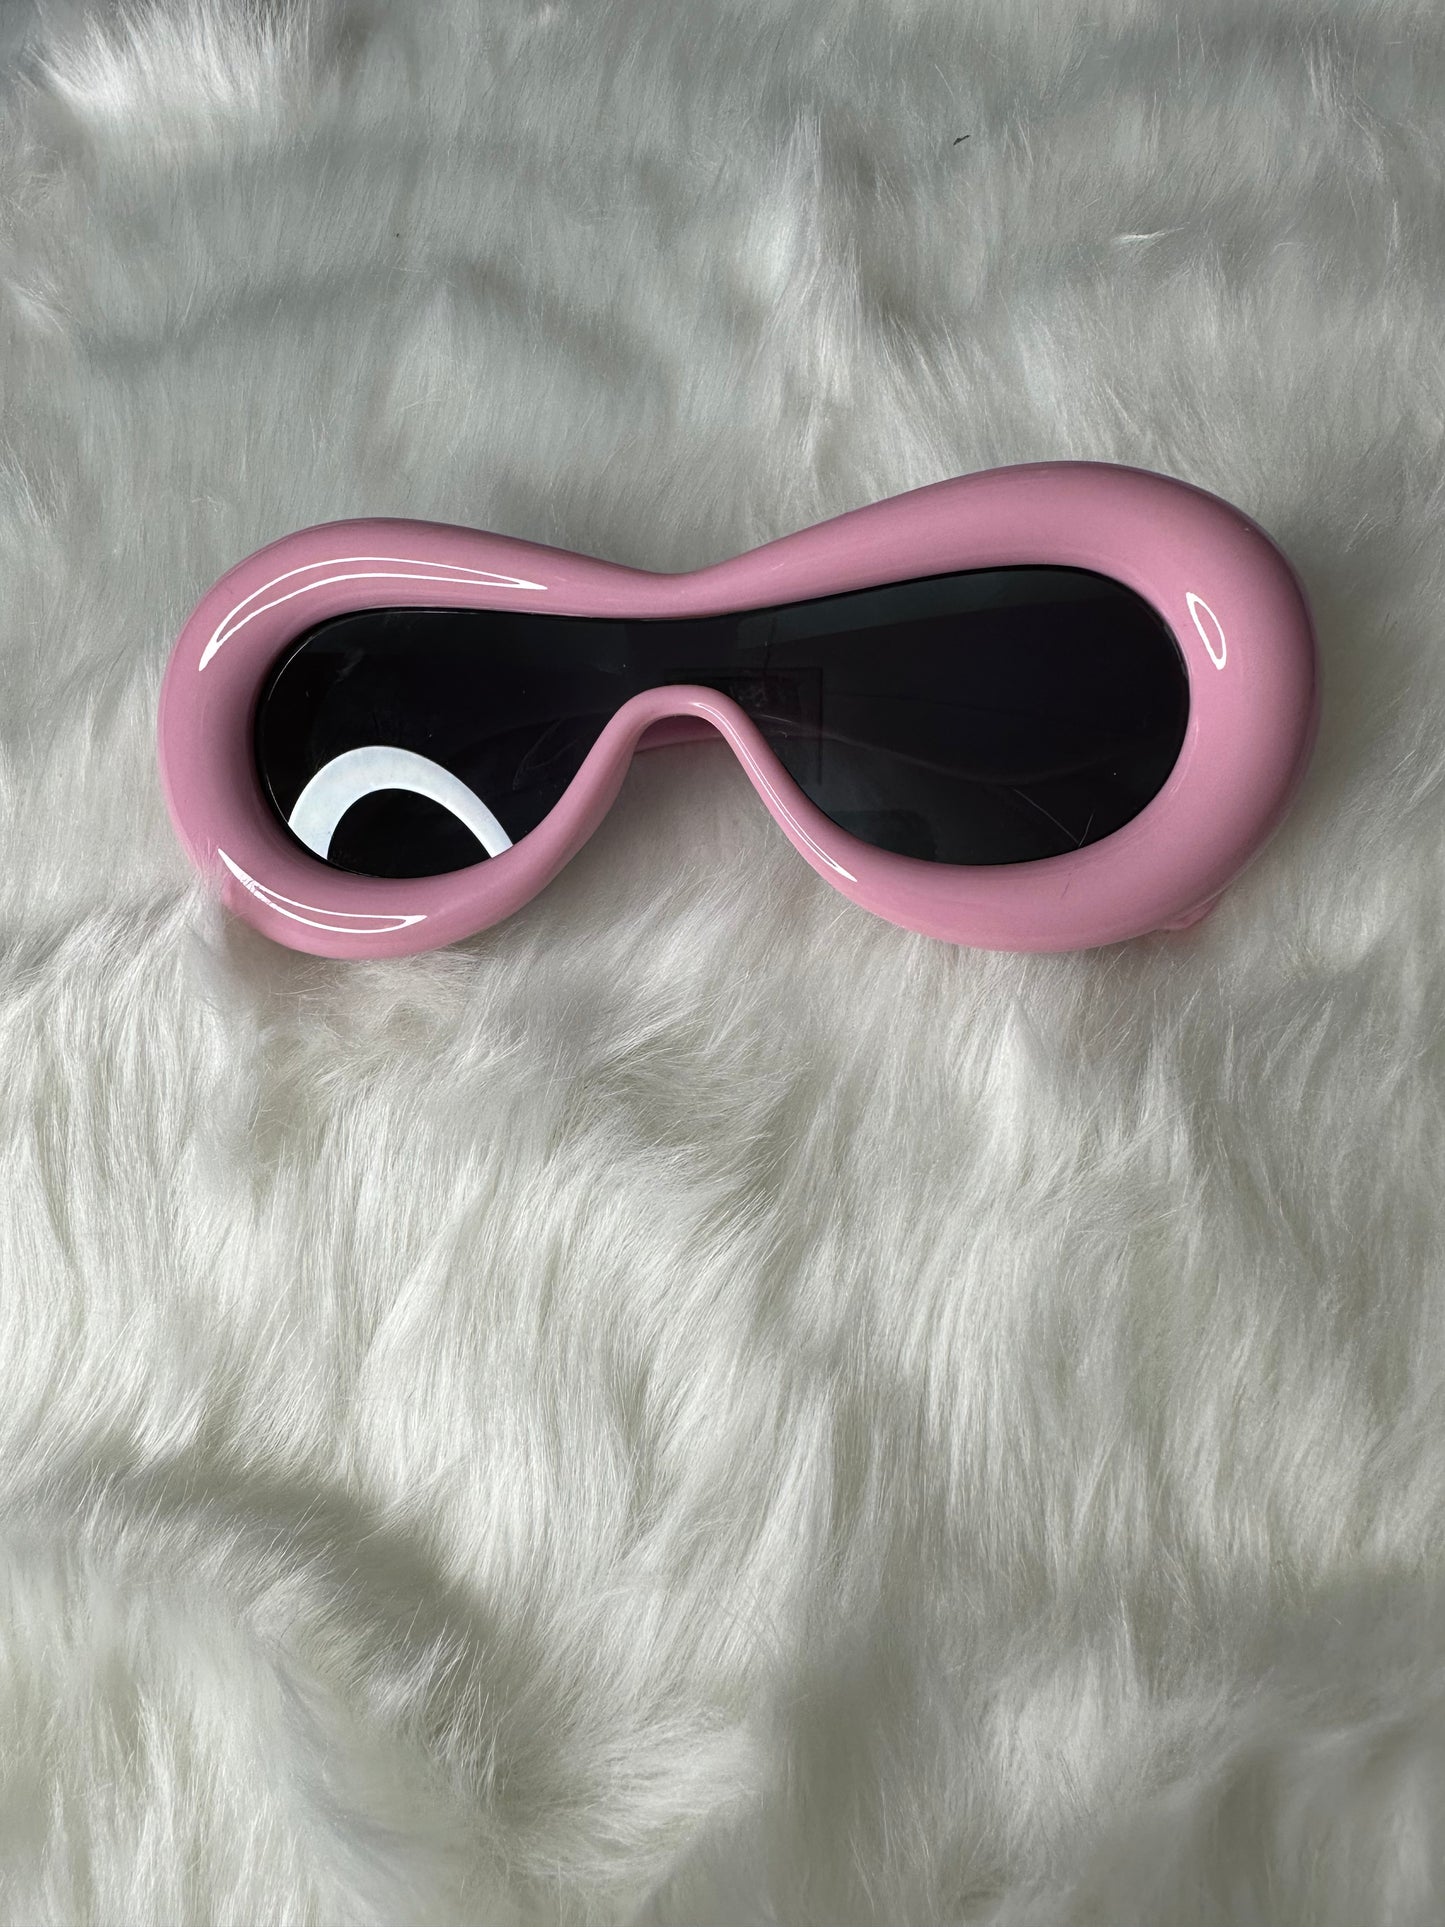 Groovy Sunglasses